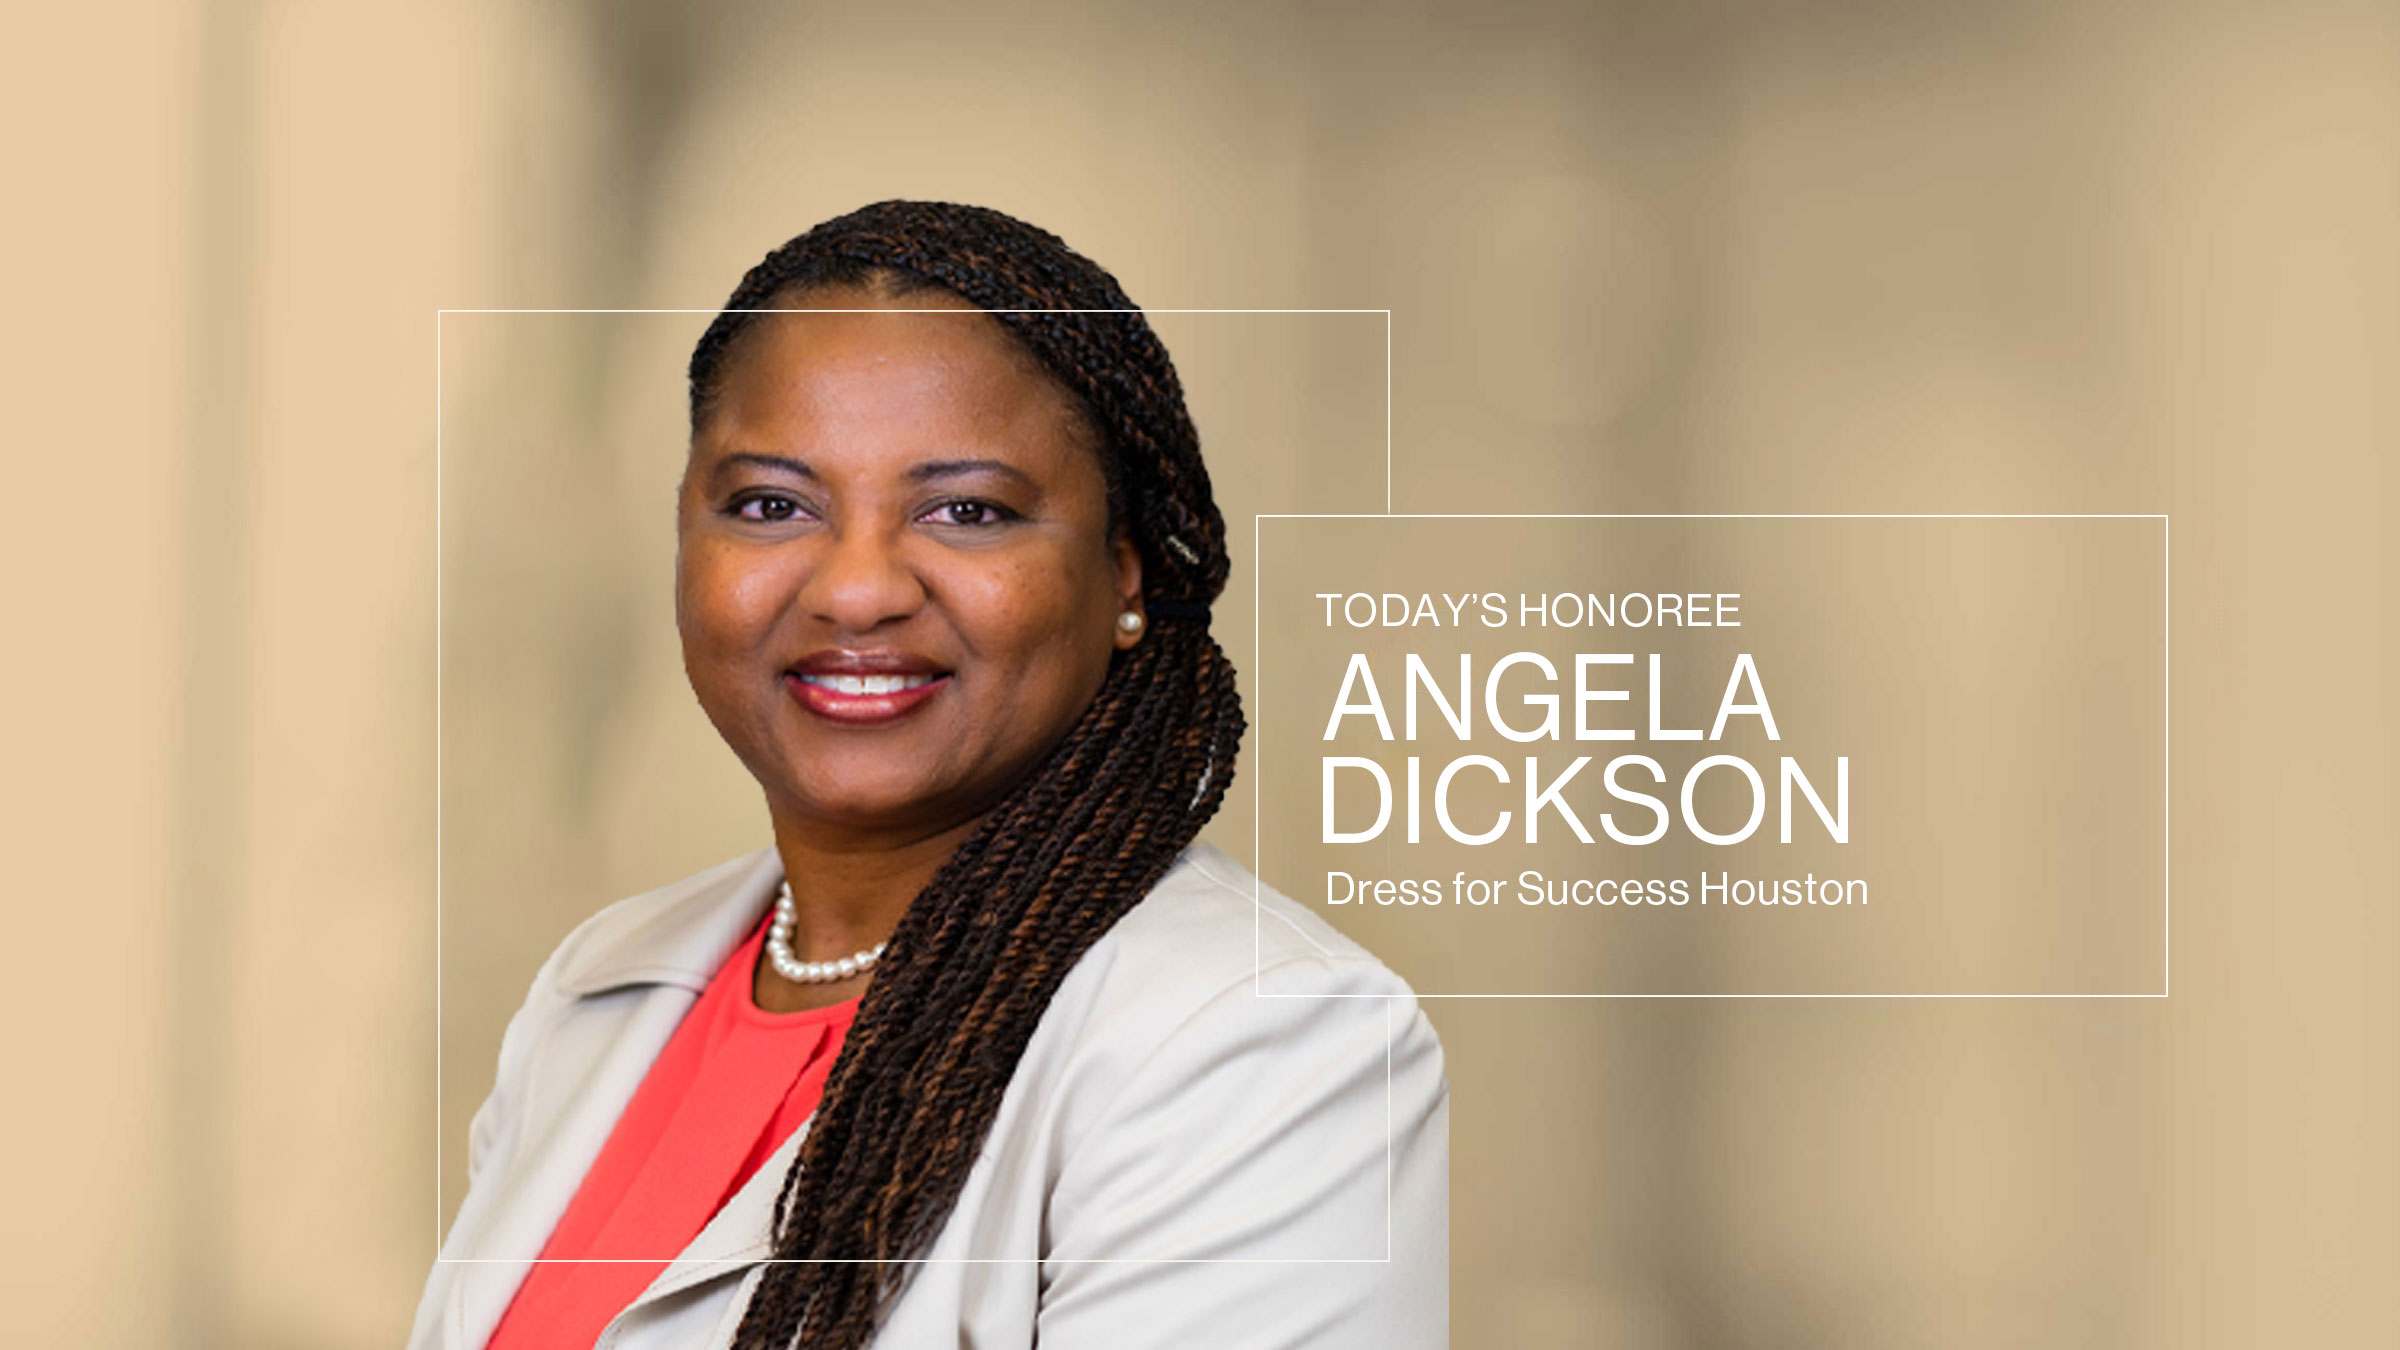 Angela Dickson